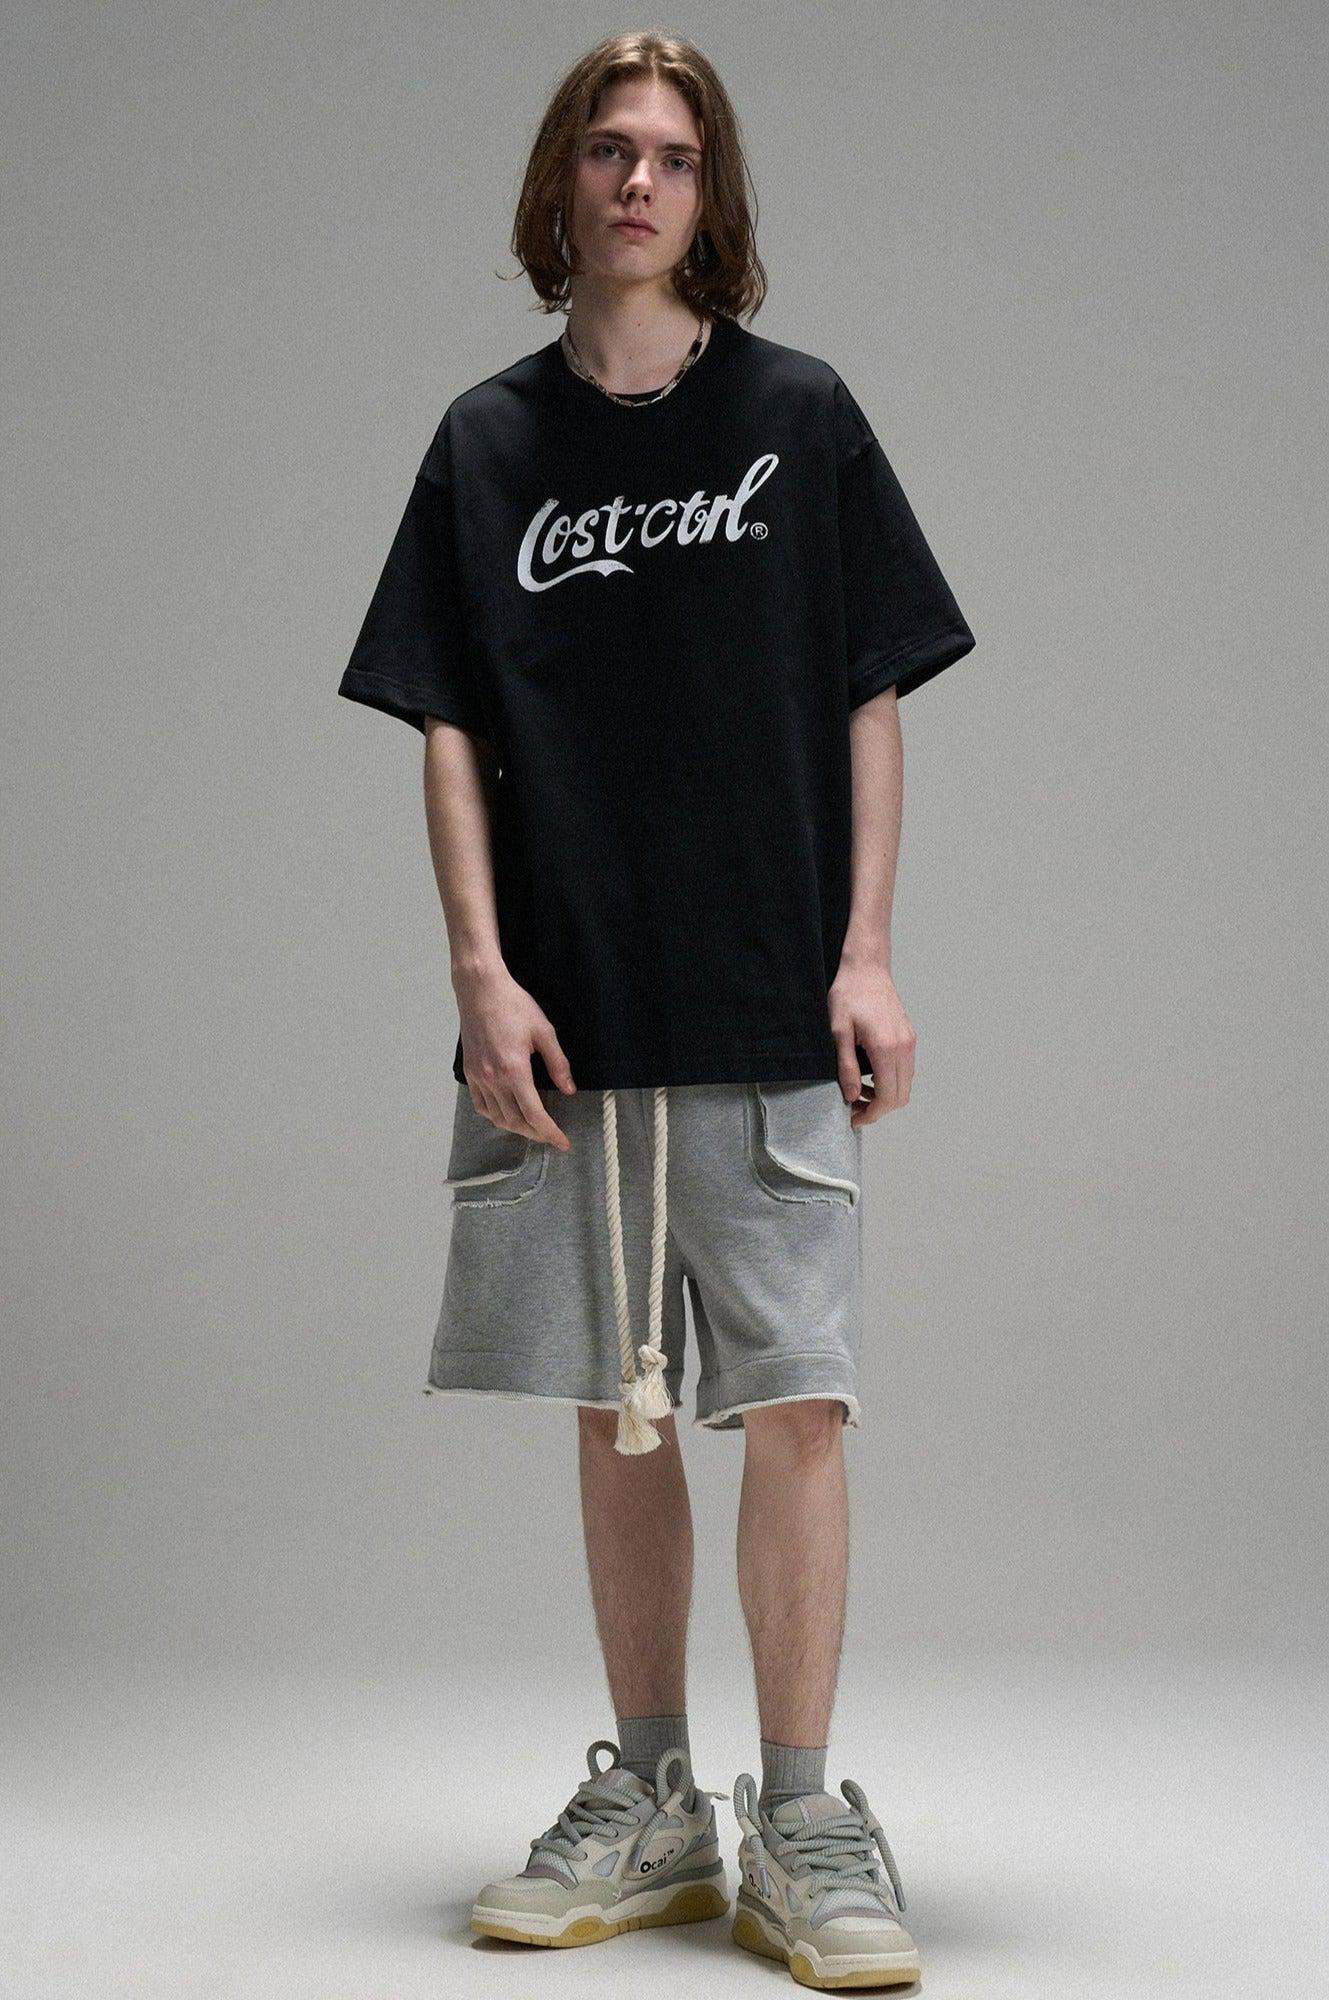 Logo Coke Font Style T-Shirt Korean Street Fashion T-Shirt By Lost CTRL Shop Online at OH Vault